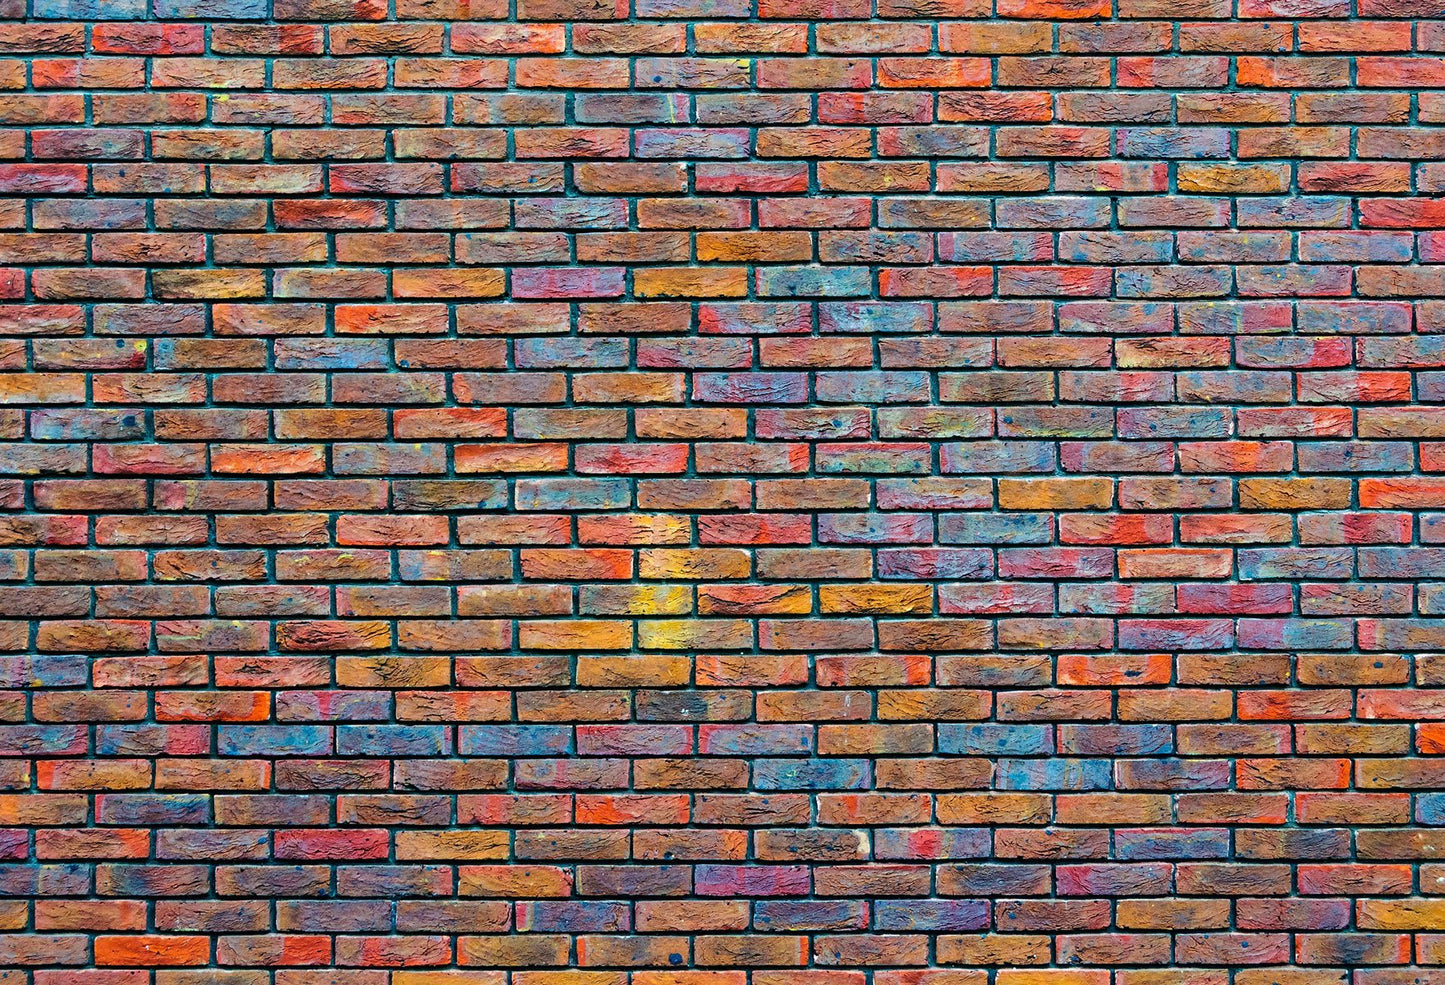 Graffiti Brick Wall Photography Portrait Backdrop for Picture